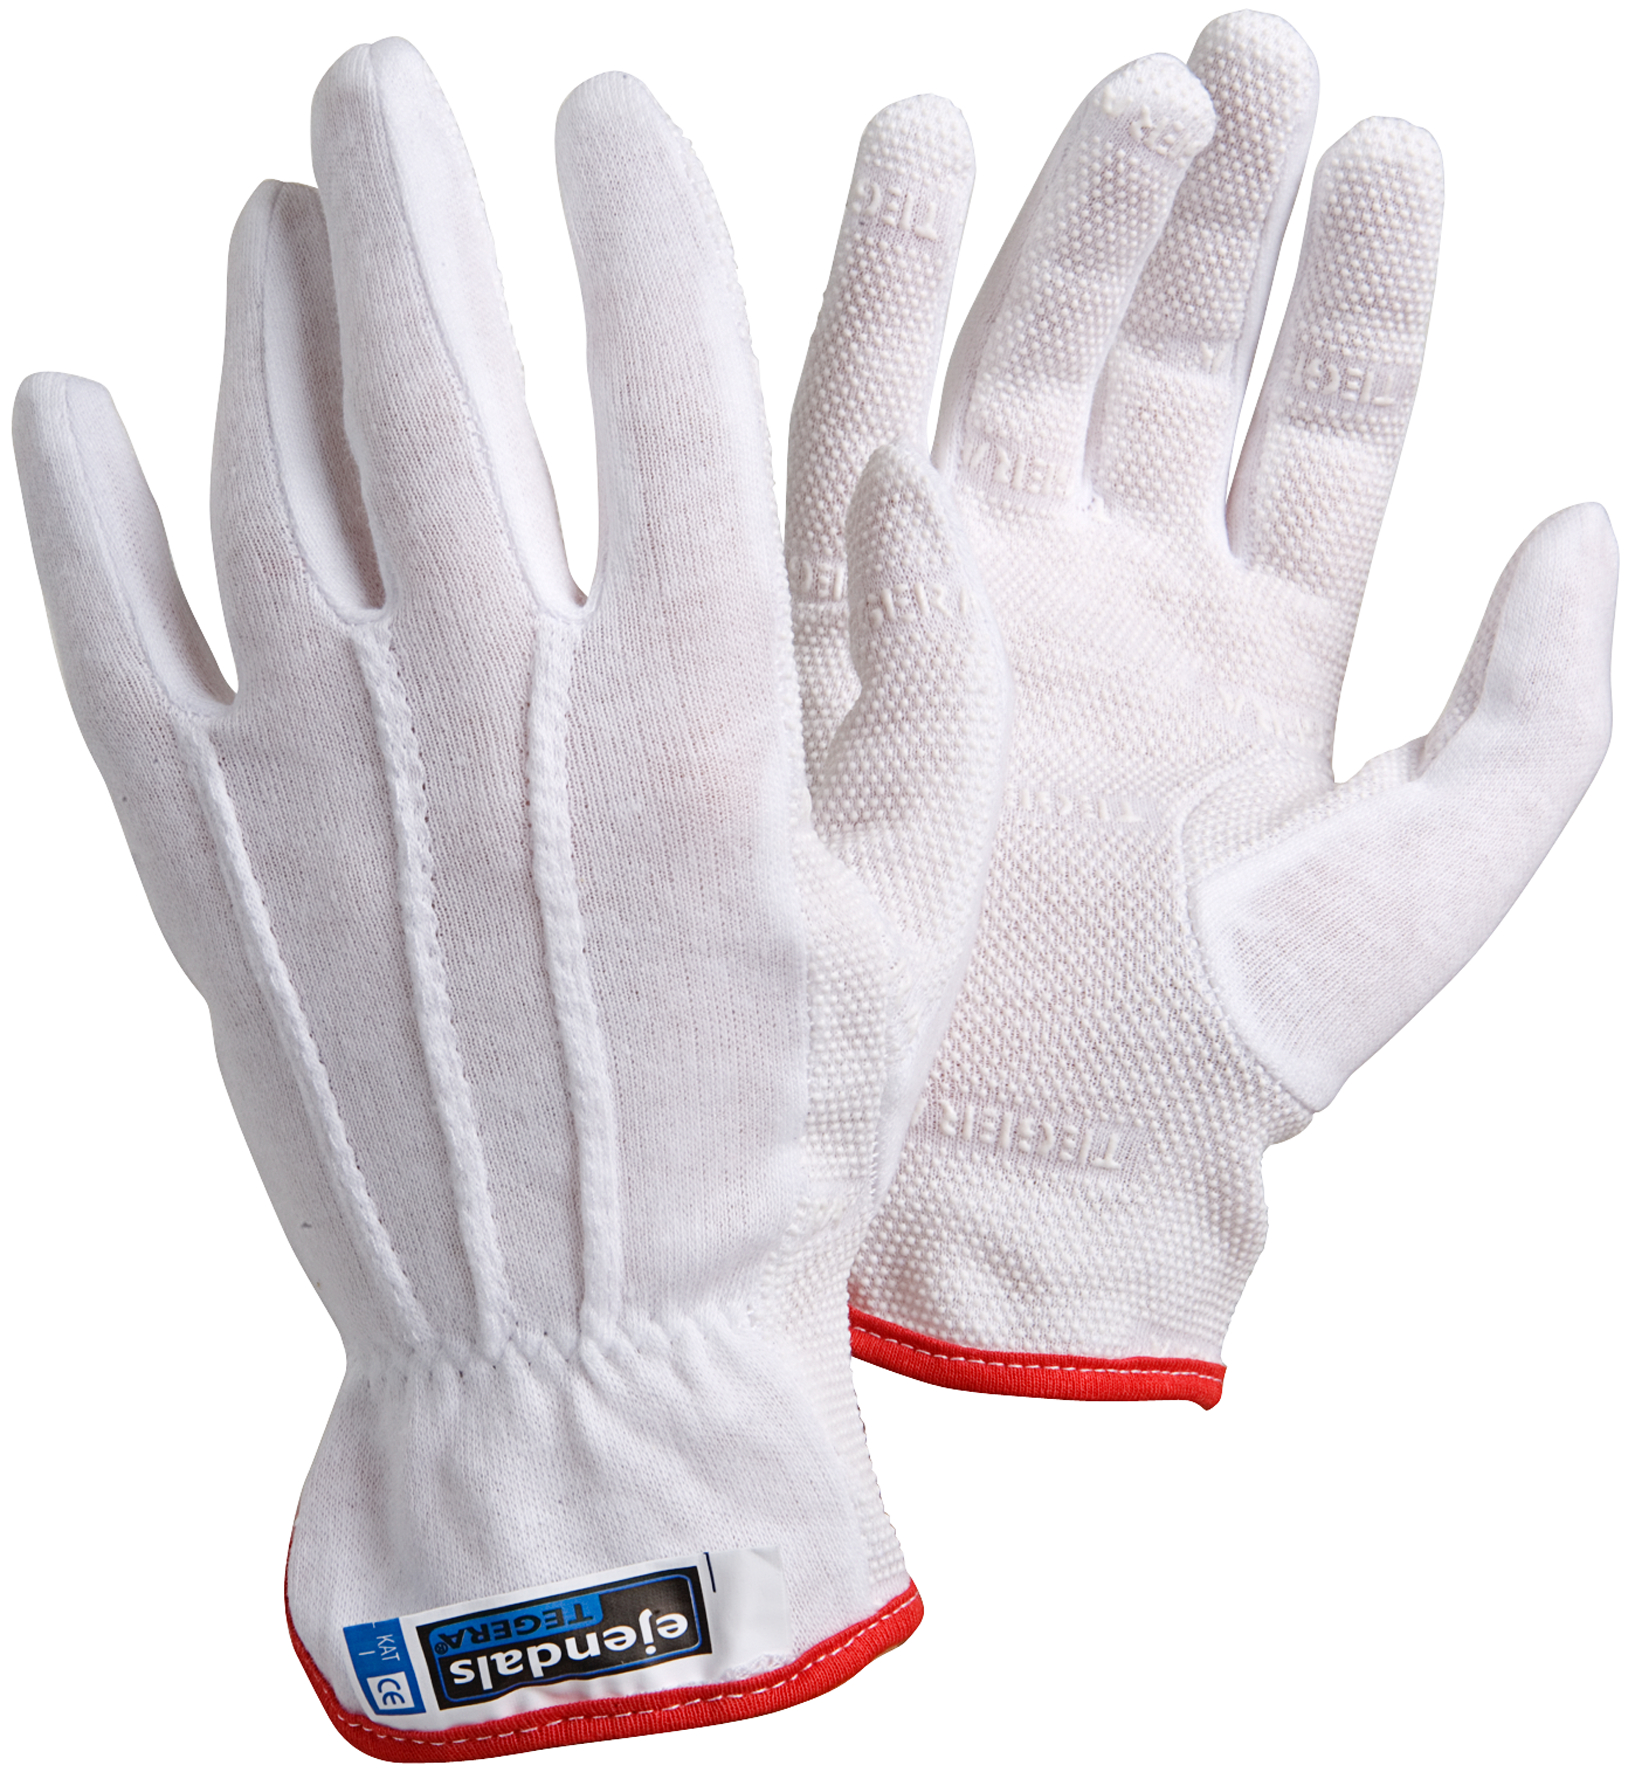 Cotton gloves 9, with Vinyl nubs